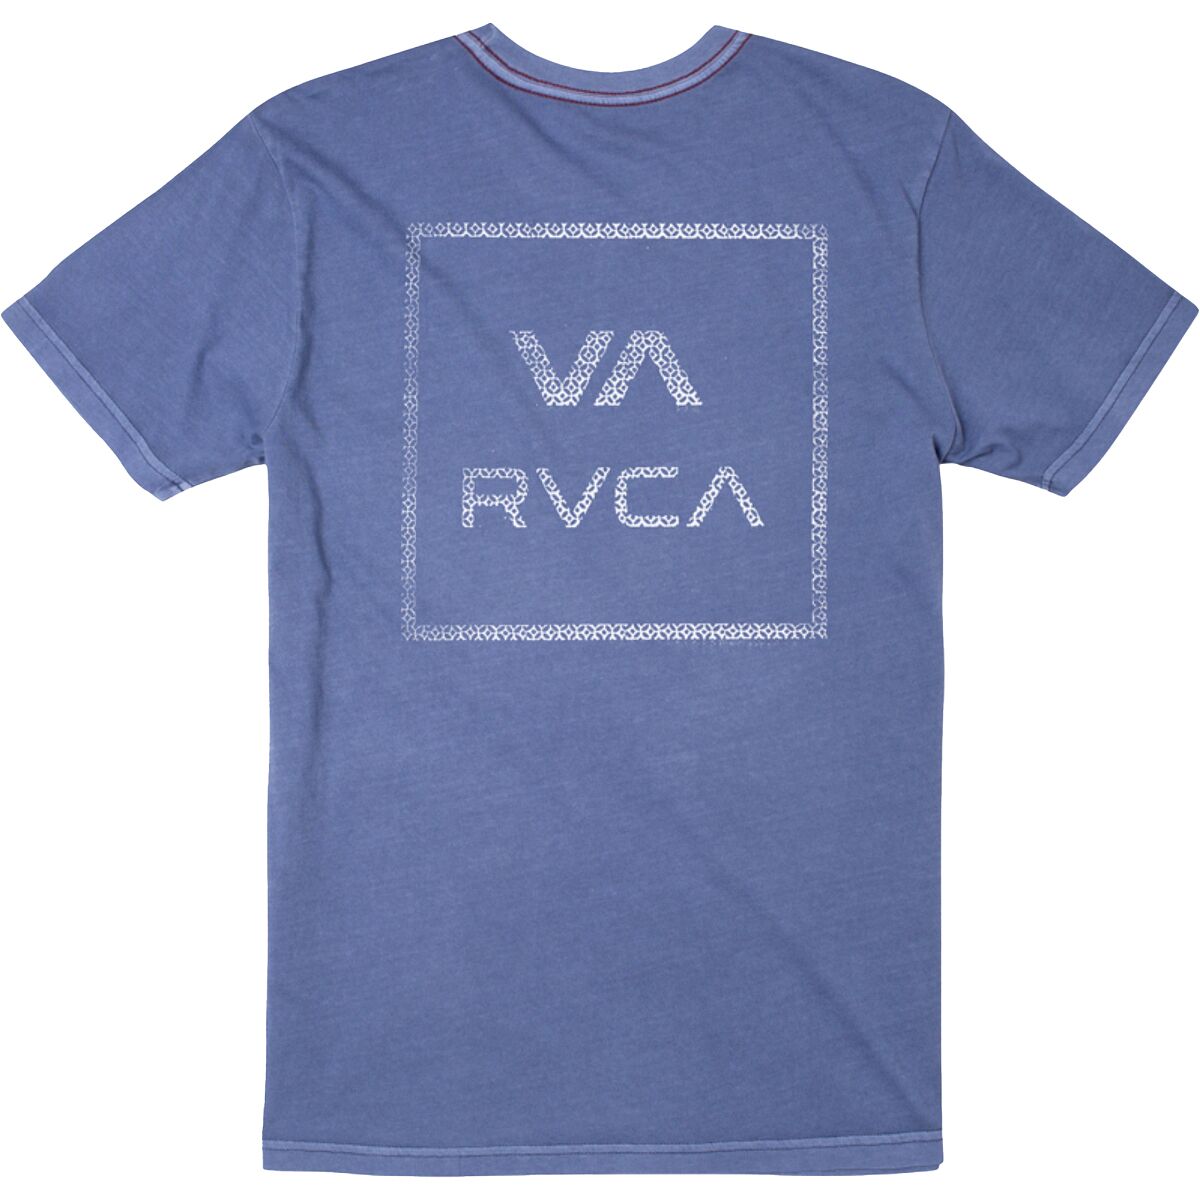 RVCA VA All The Way Short-Sleeve T-Shirt - Men's